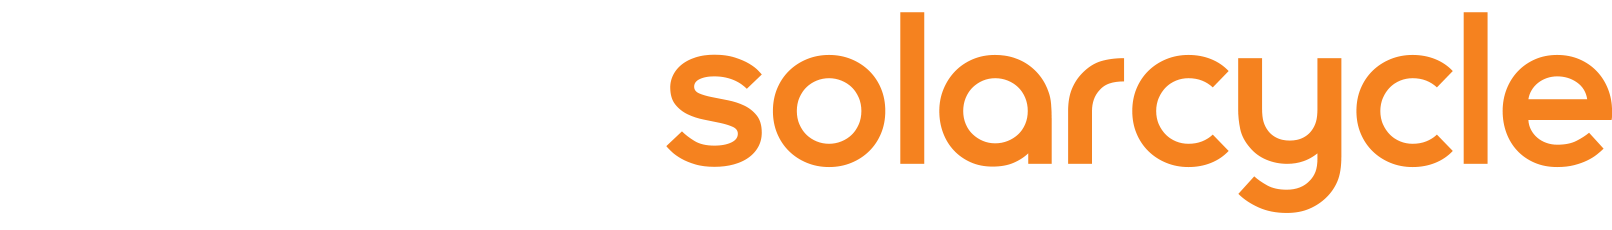 Dyson Solarcycle Morph Logo